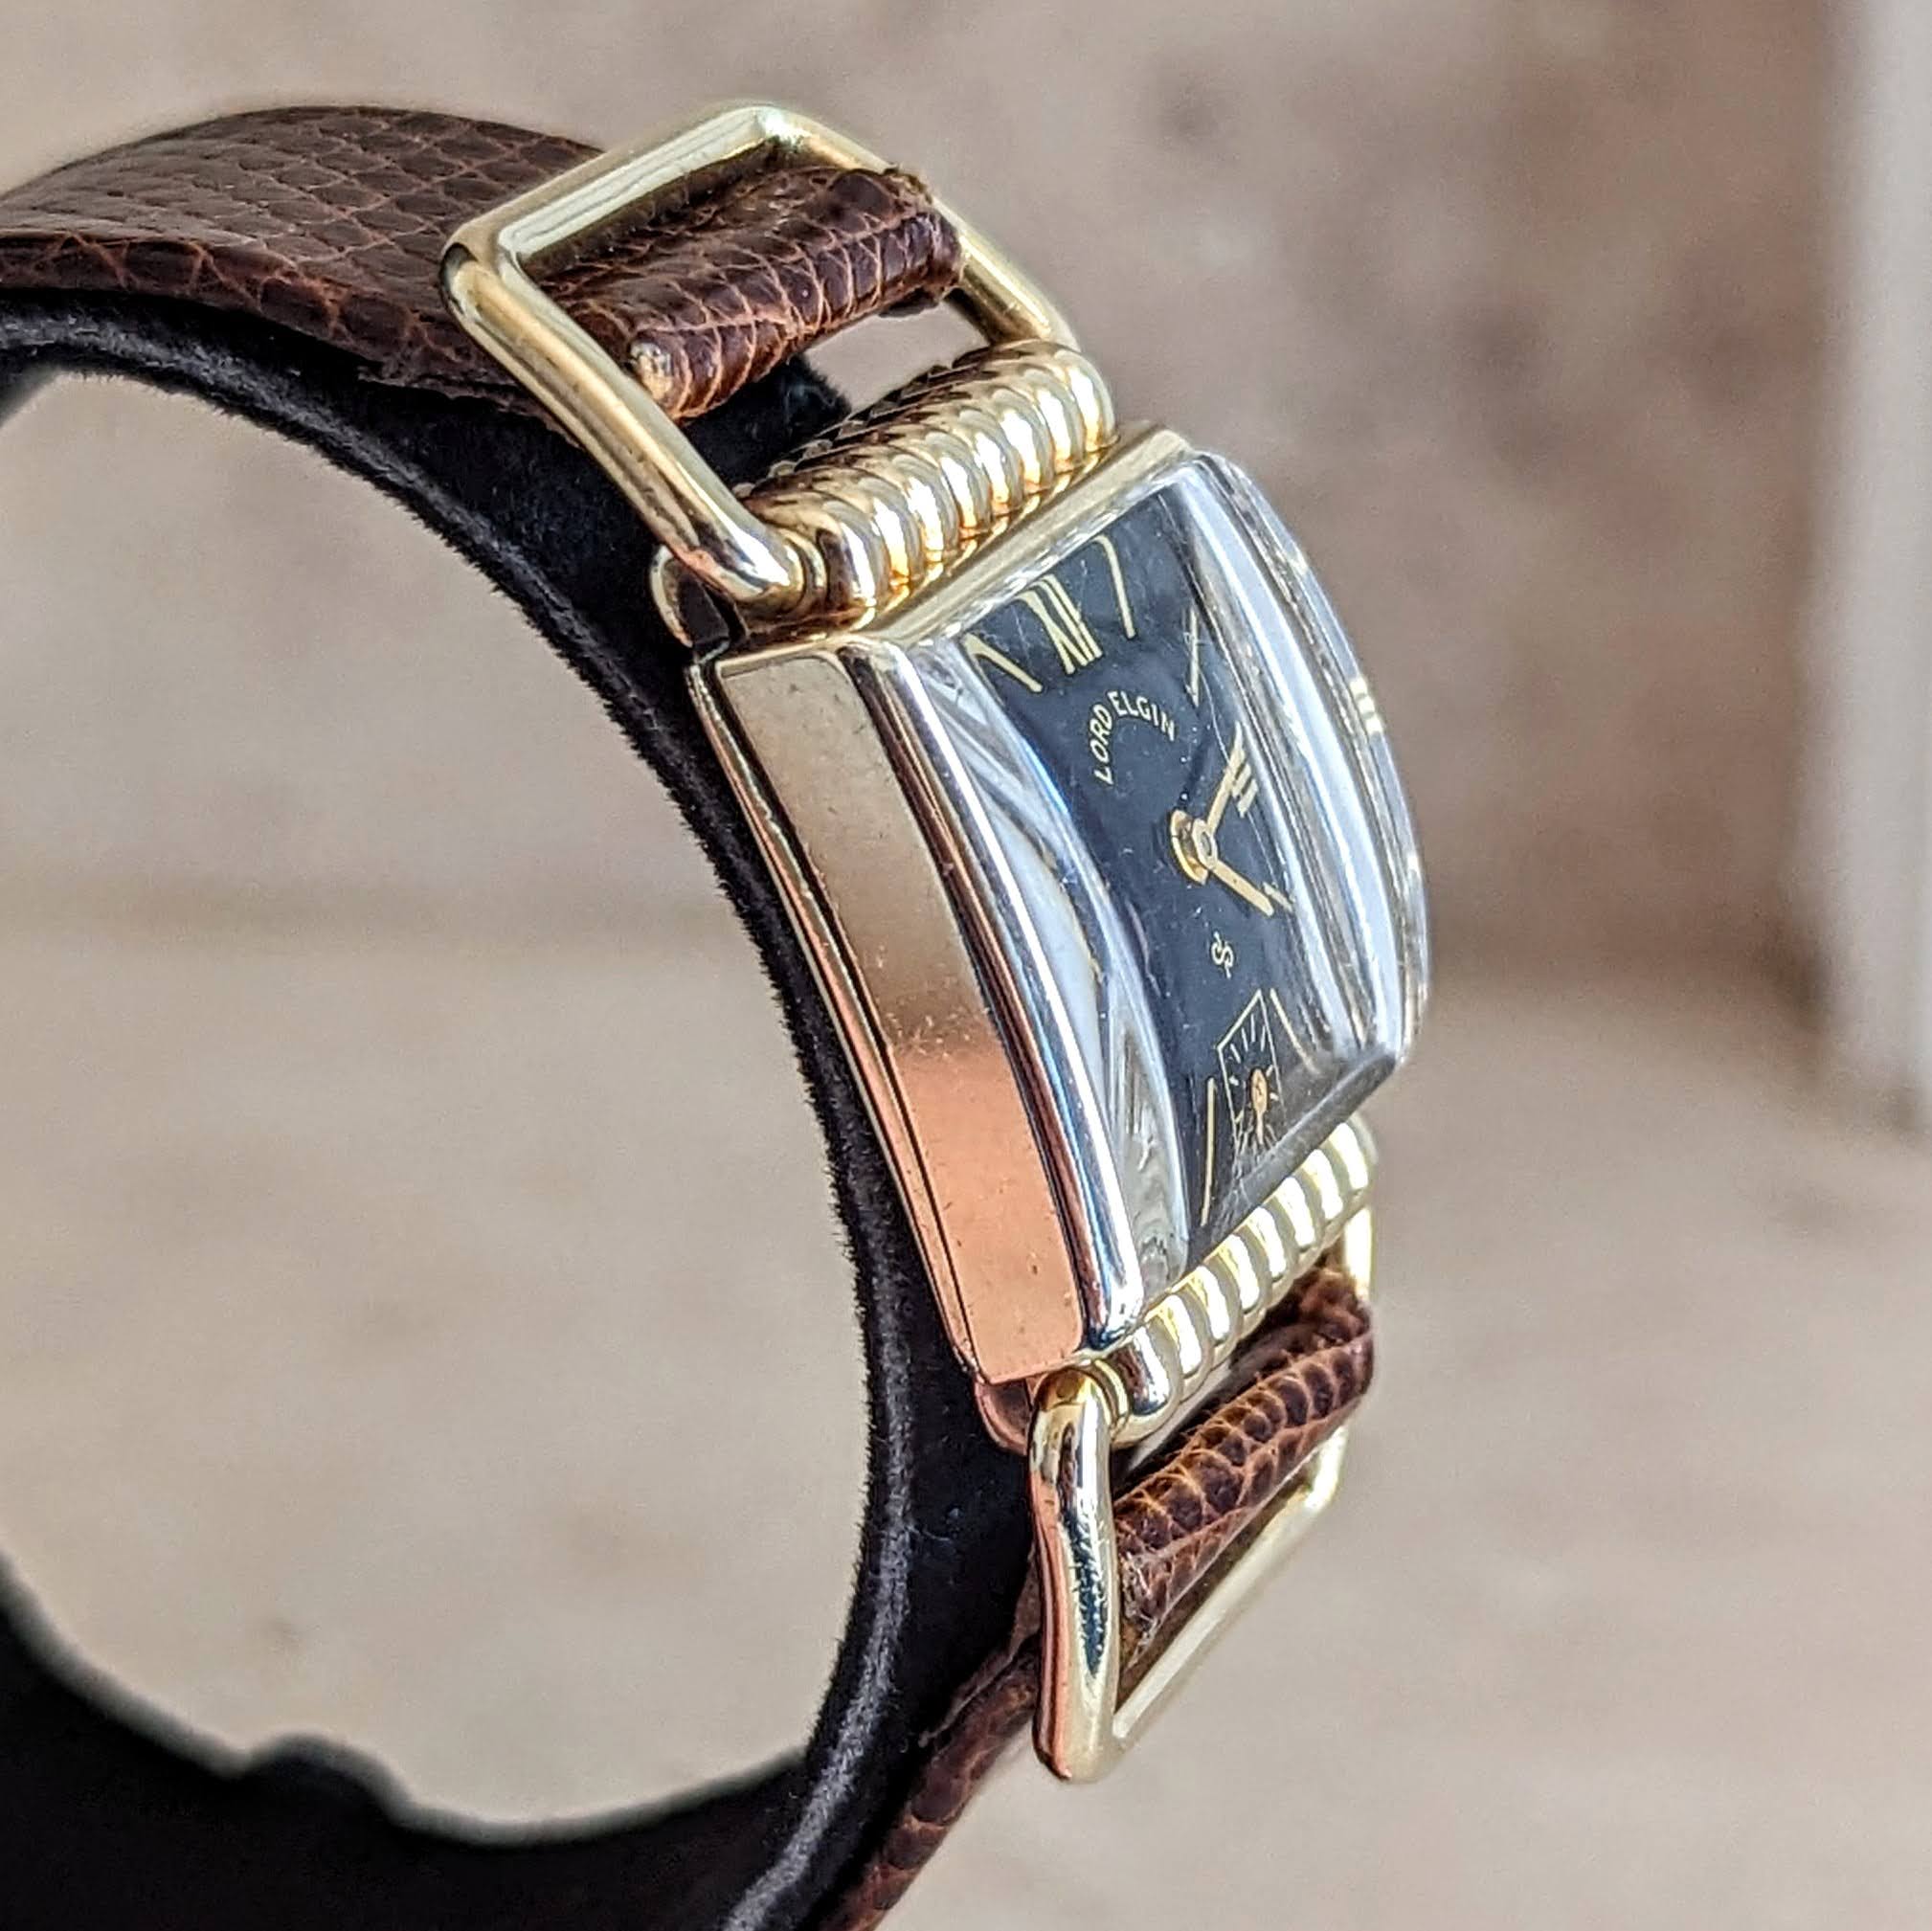 1950 LORD ELGIN Drivers Watch Ref. 4602 21 Jewels 4 ADJ’s Grade 626 U.S.A. Made Wristwatch